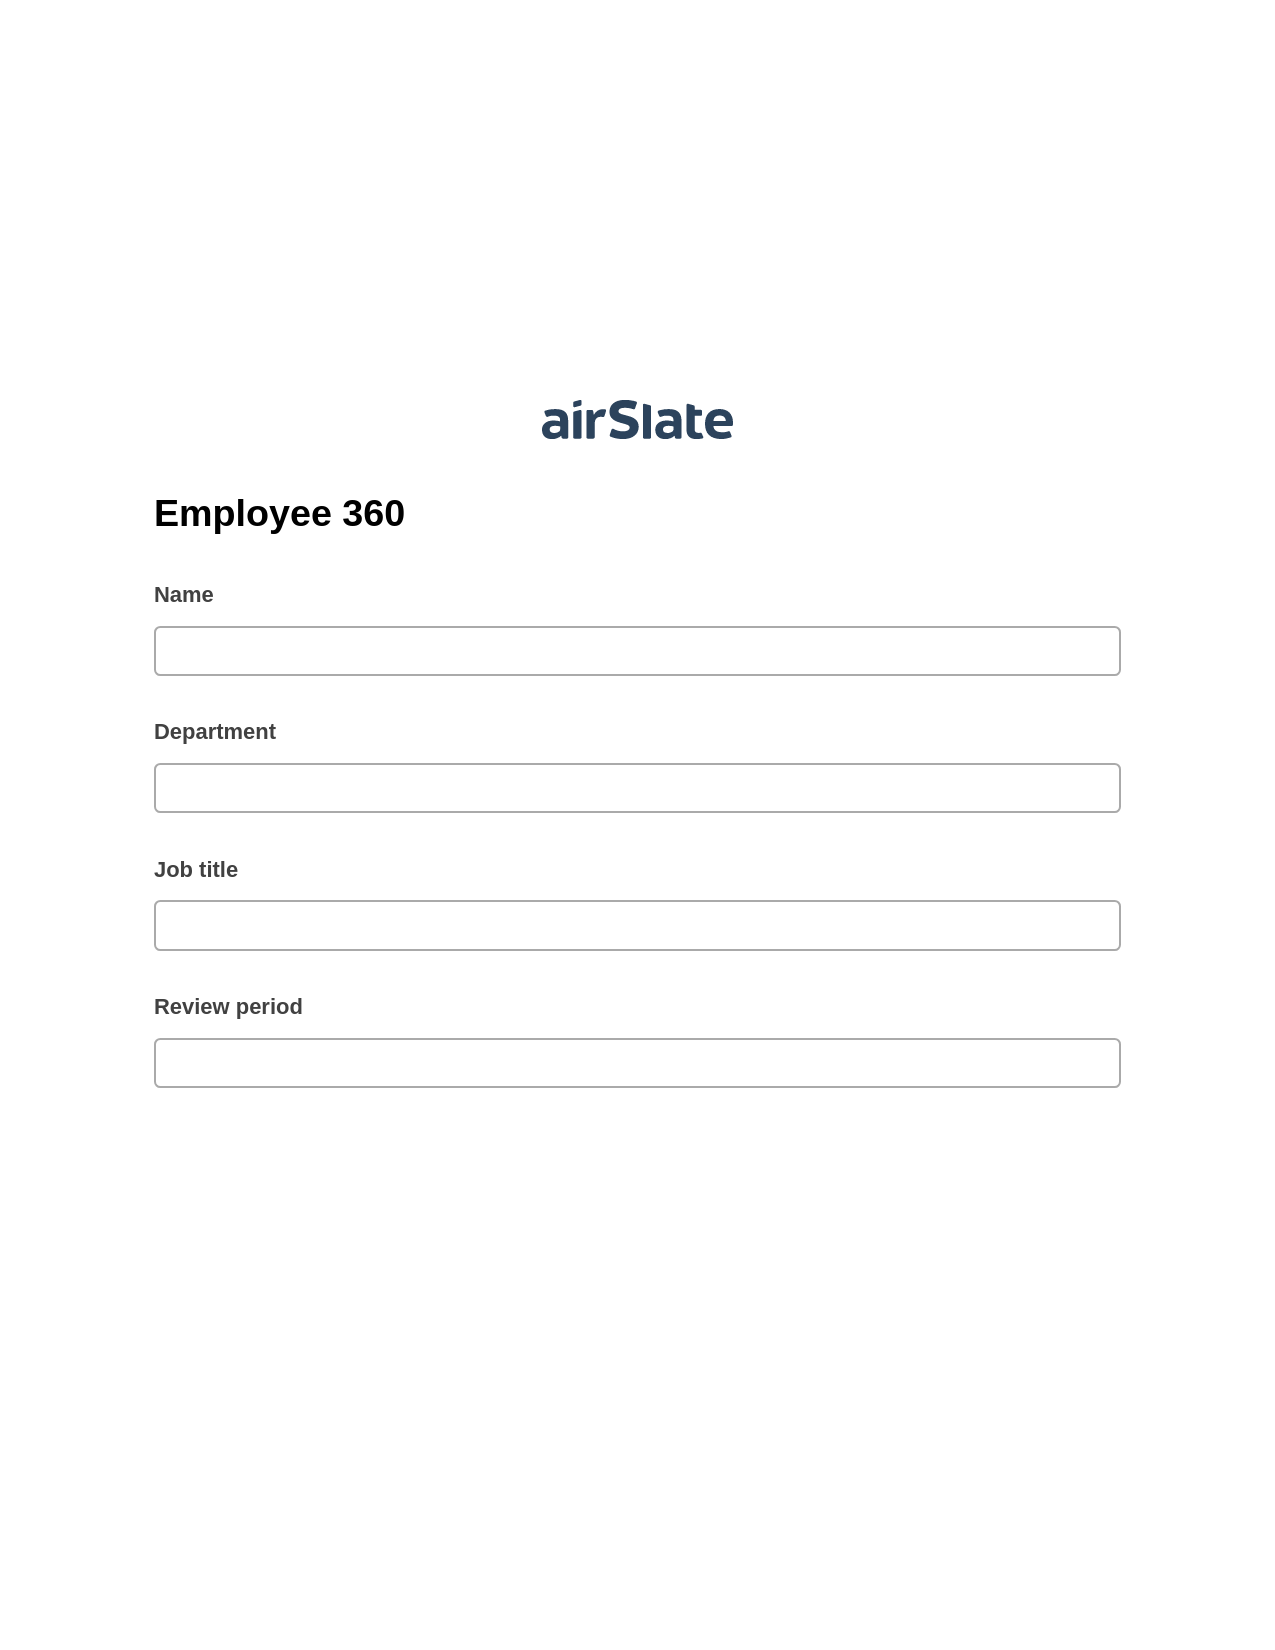 Employee 360 Pre-fill from CSV File Bot, Google Calendar Bot, Webhook Postfinish Bot